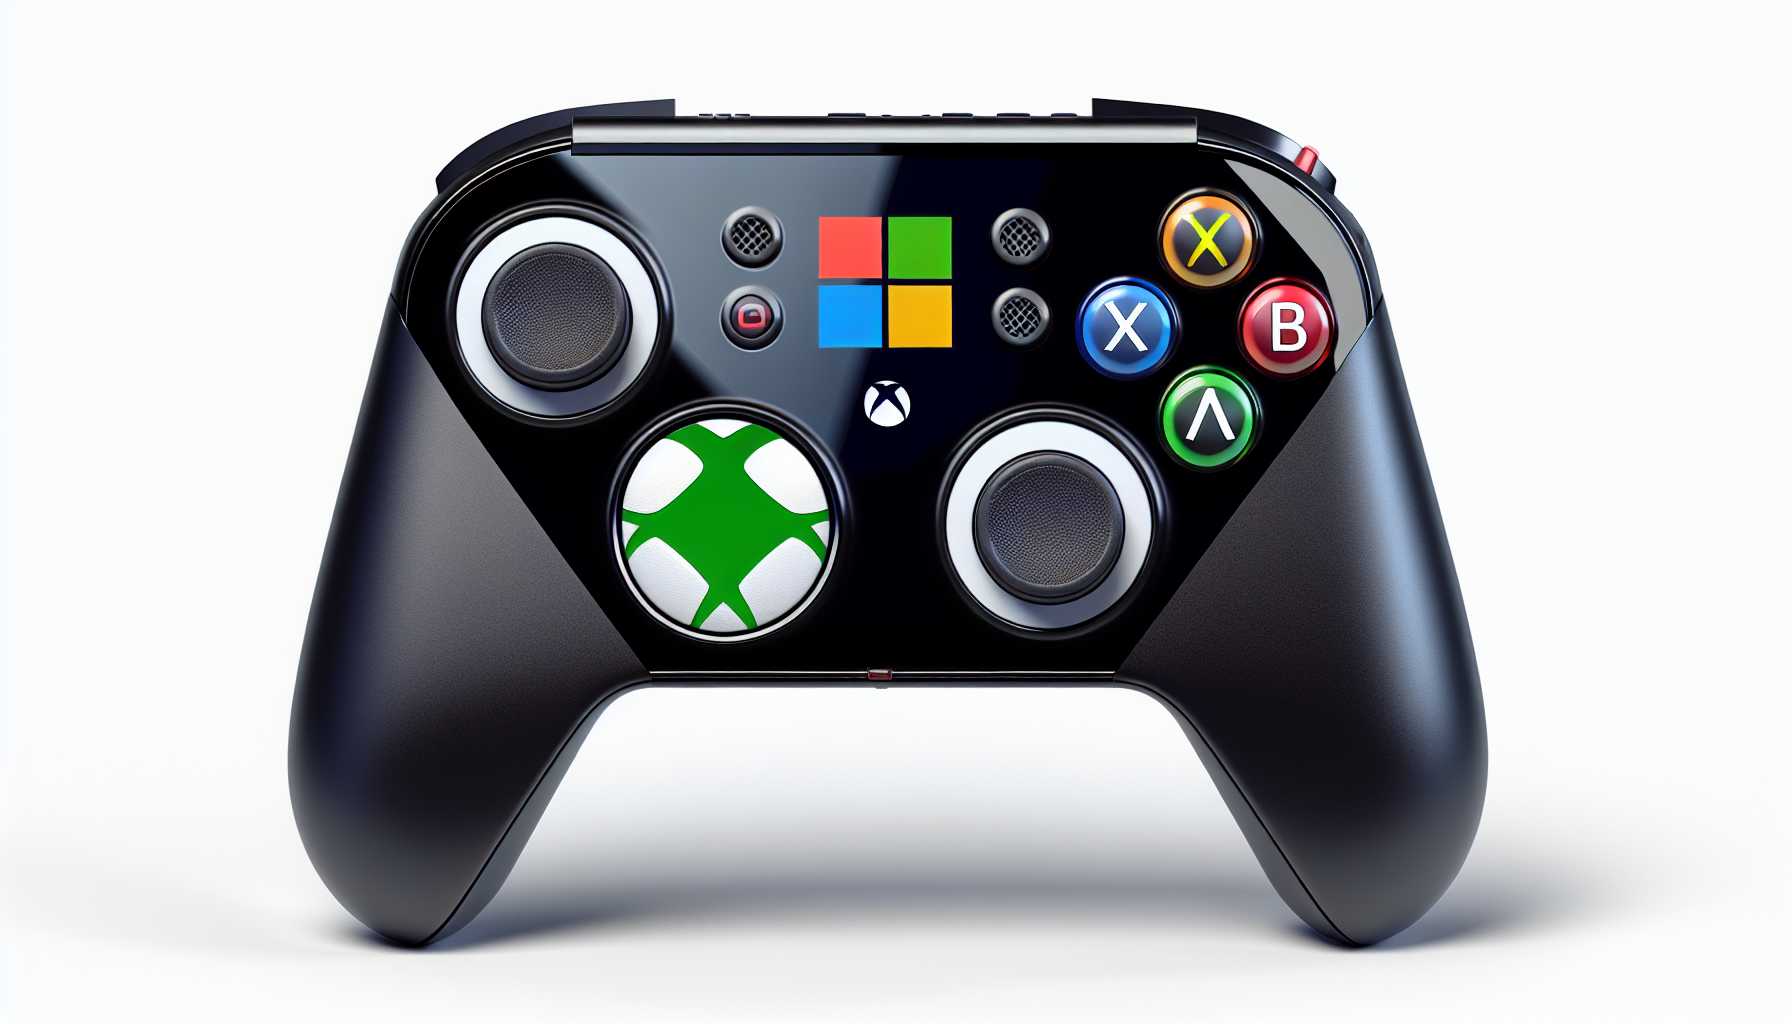 Sleek handheld gaming device merging Xbox and Windows elements